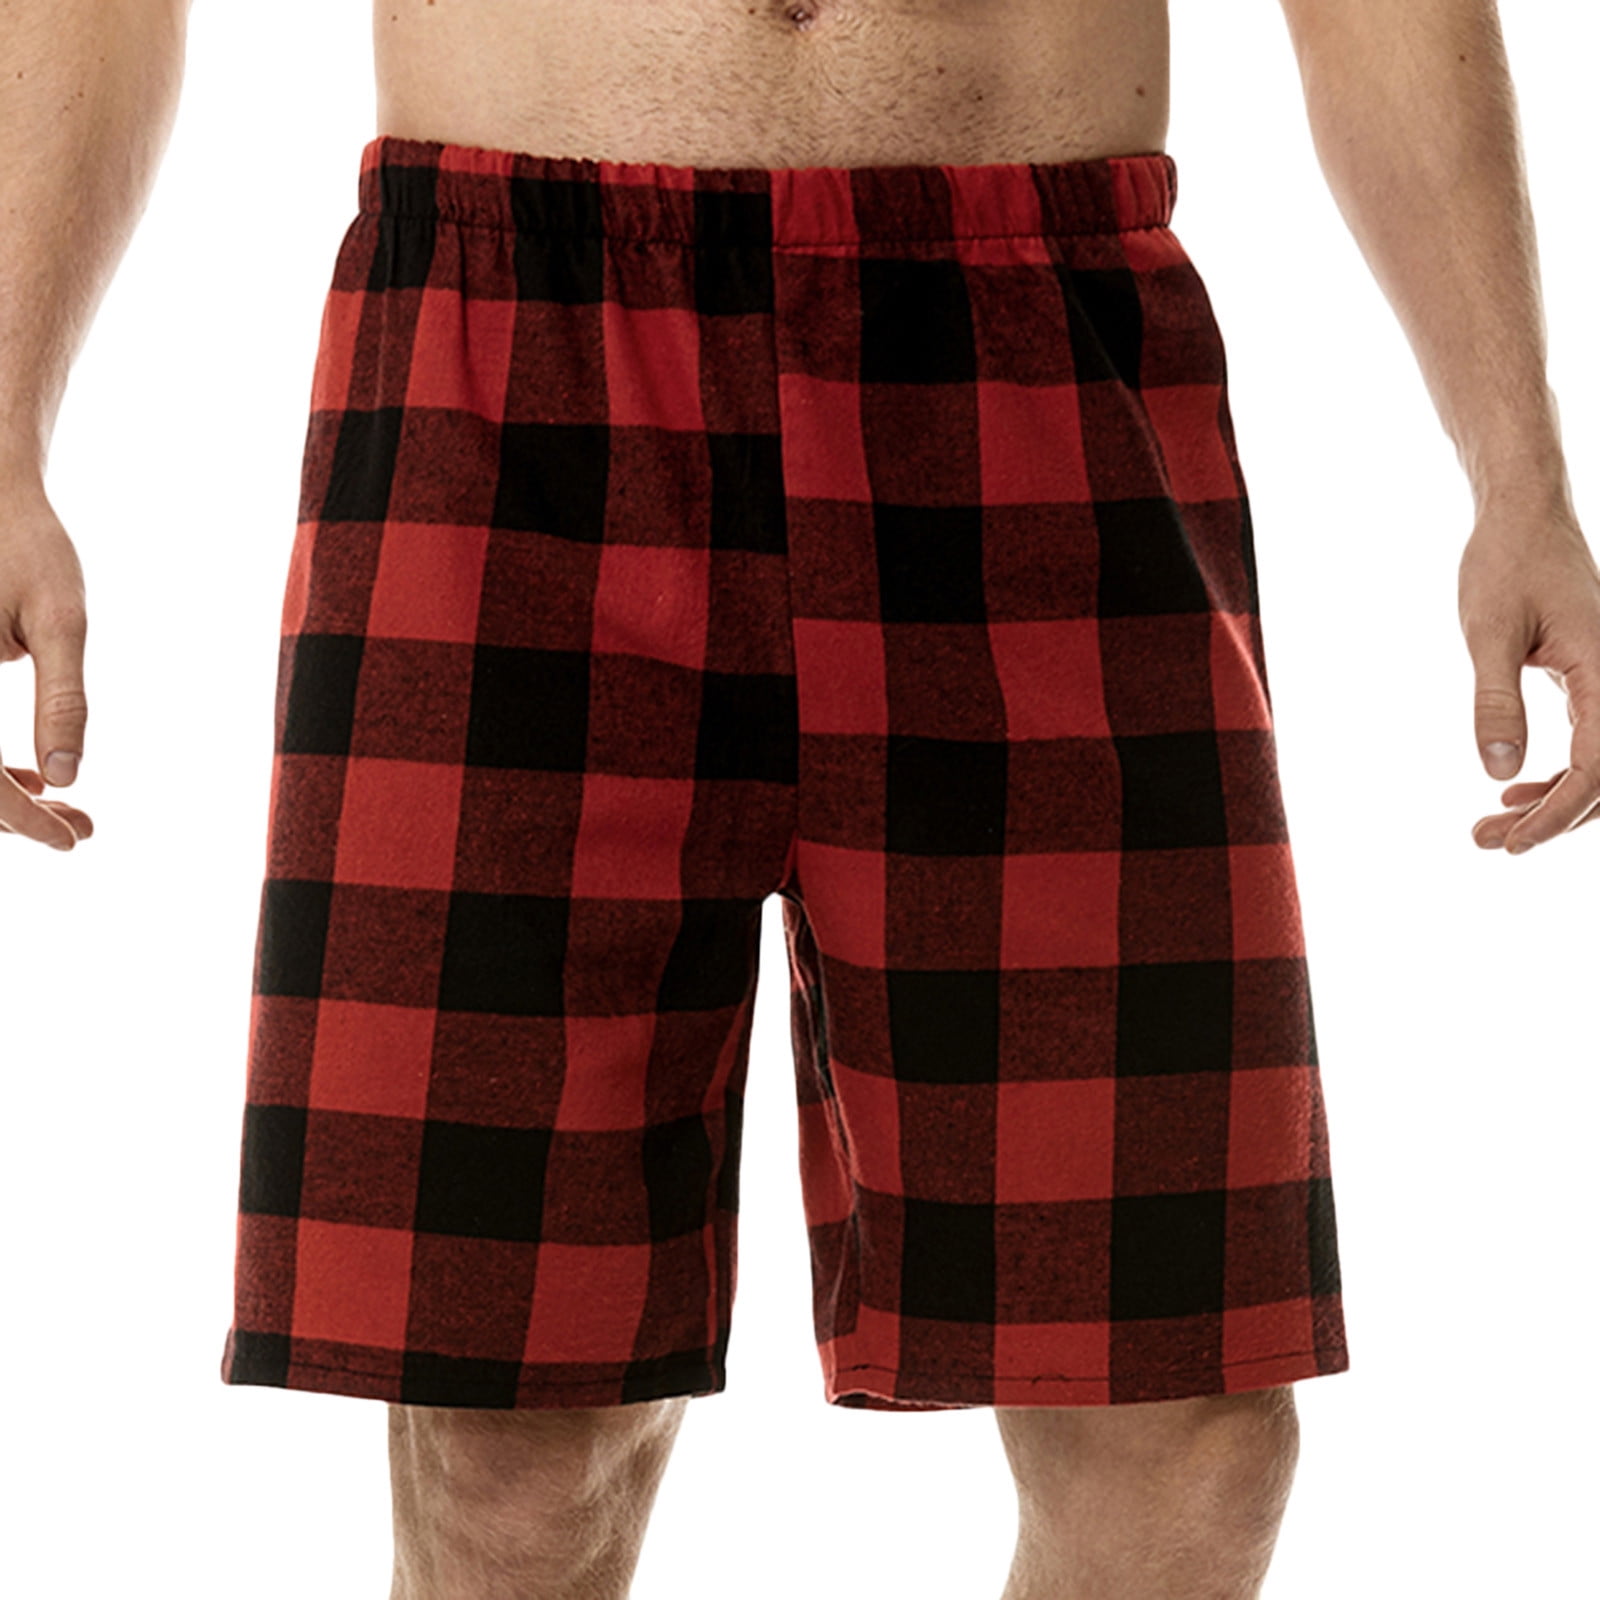 DxhmoneyHX Men's Plaid Pajama Shorts Light Weight Flannel Soft Lounge ...